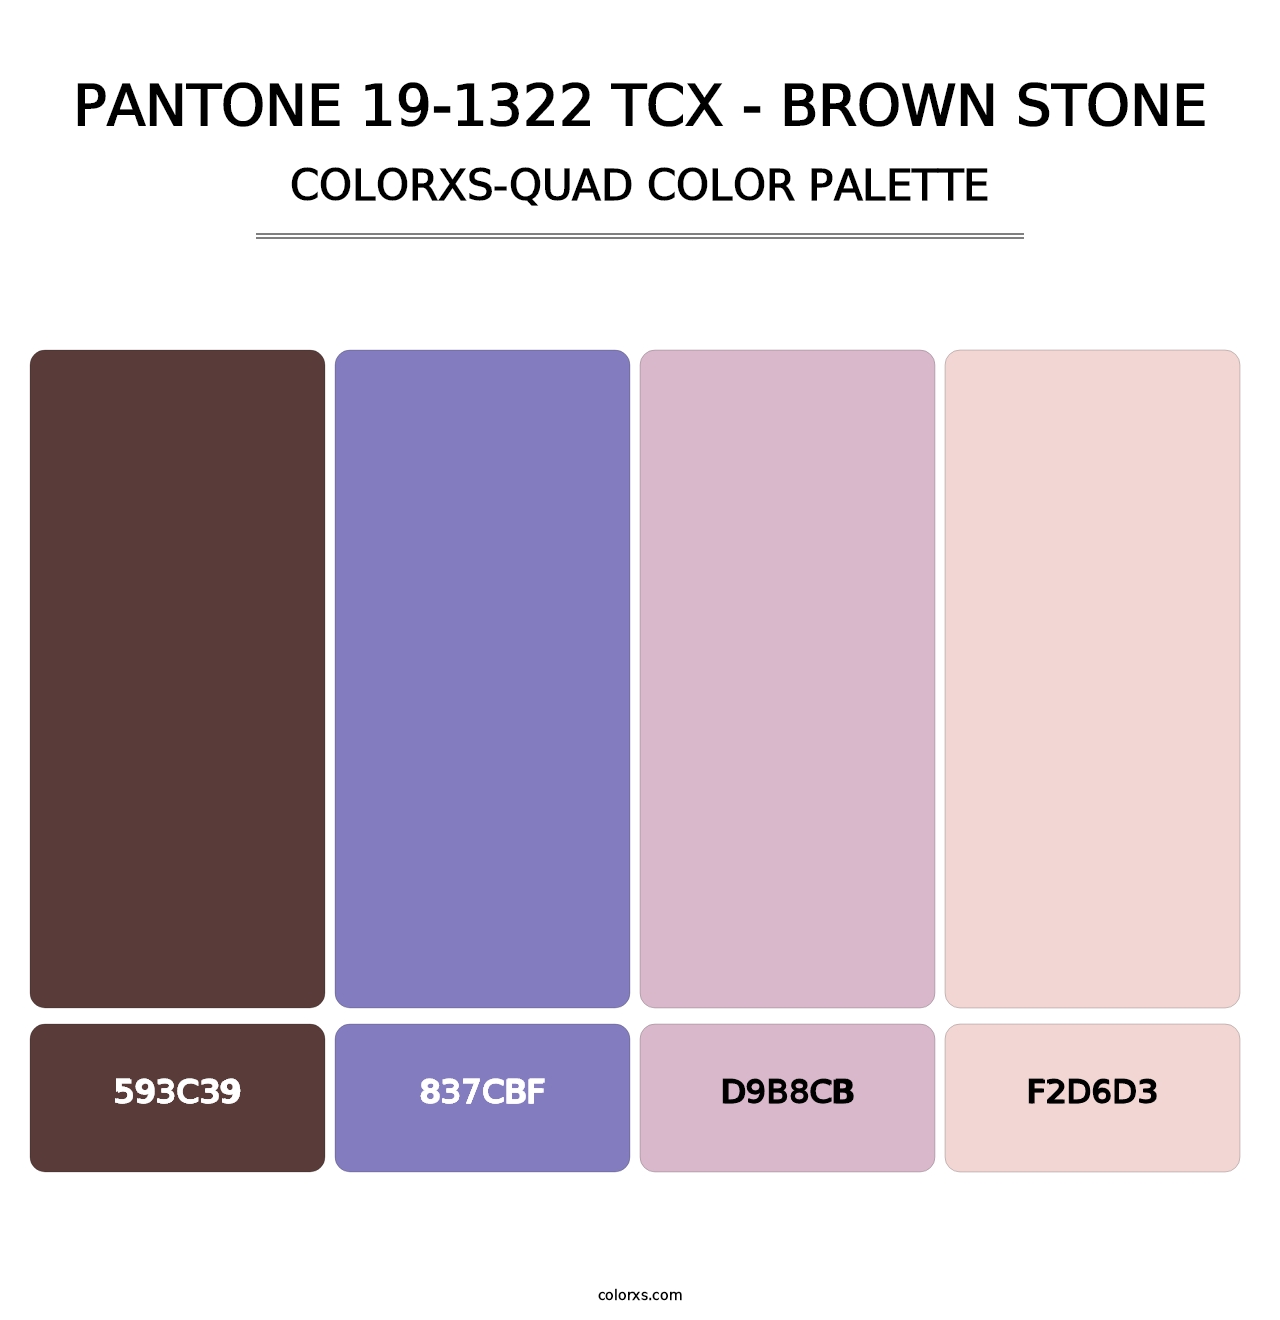 PANTONE 19-1322 TCX - Brown Stone - Colorxs Quad Palette